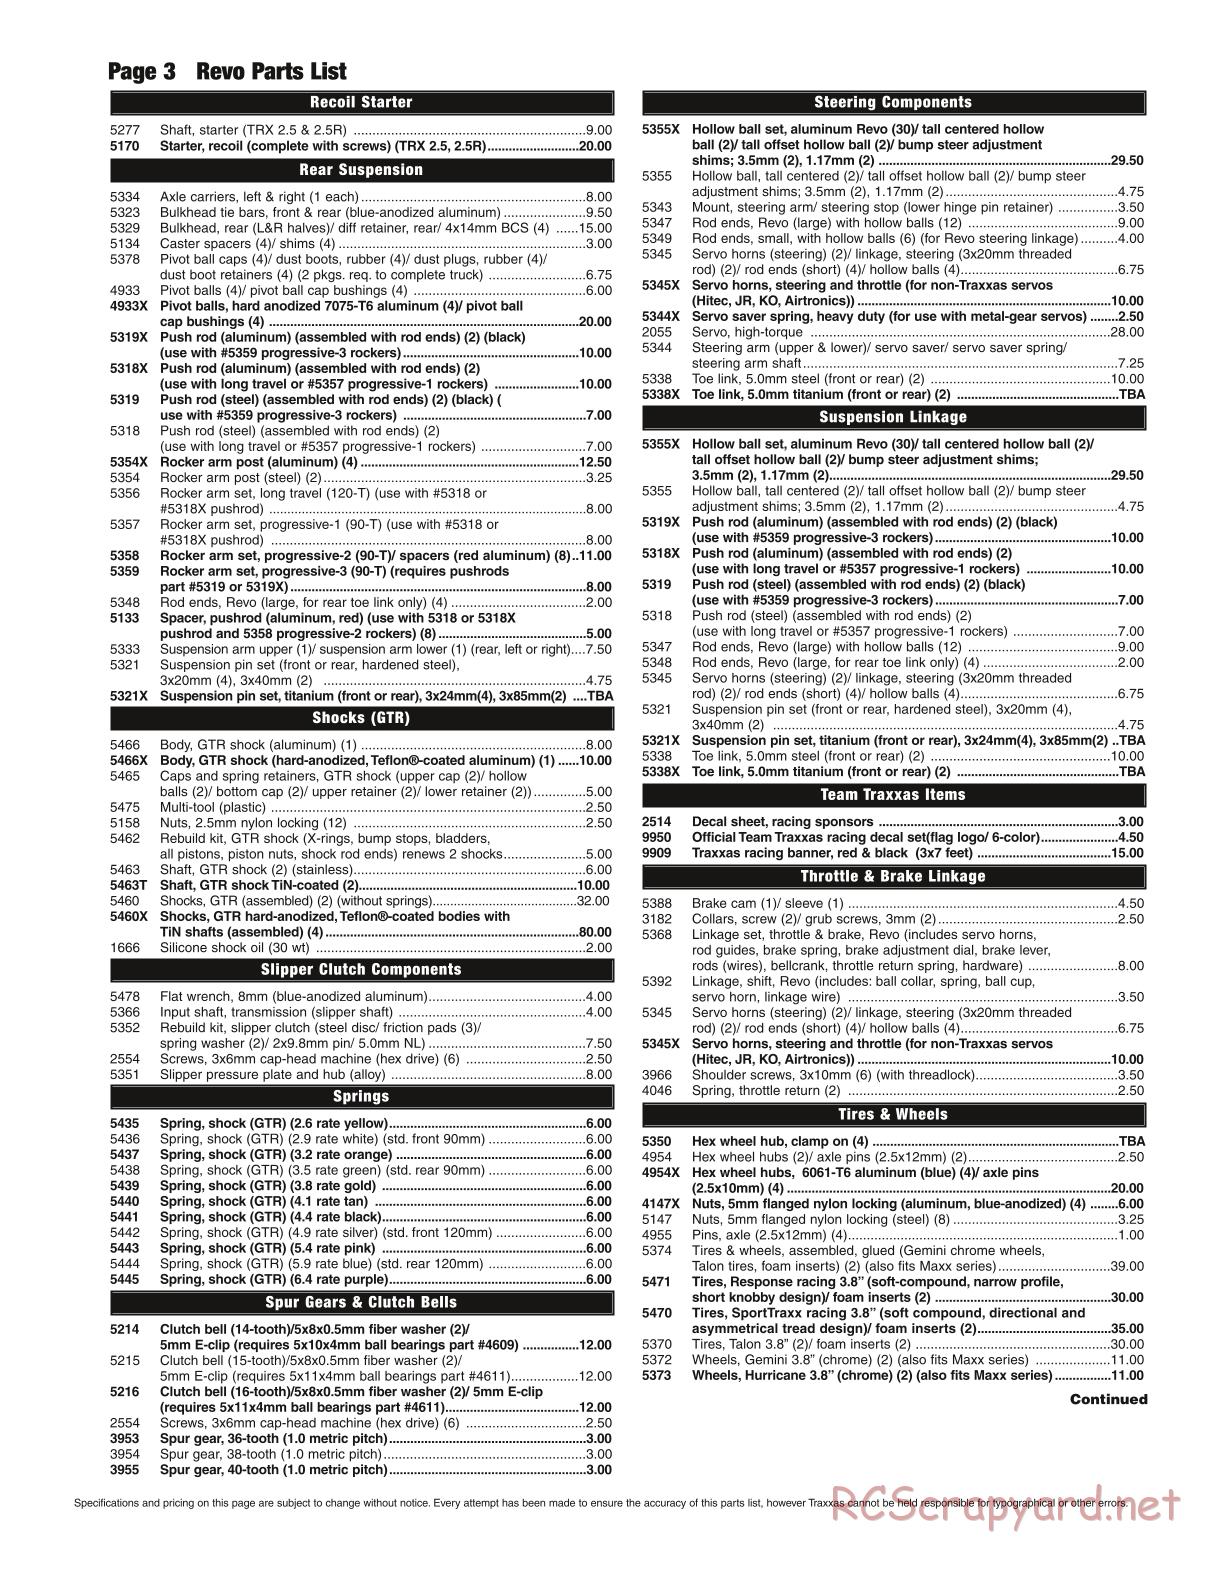 Traxxas - Revo 2.5R (2004) - Parts List - Page 3